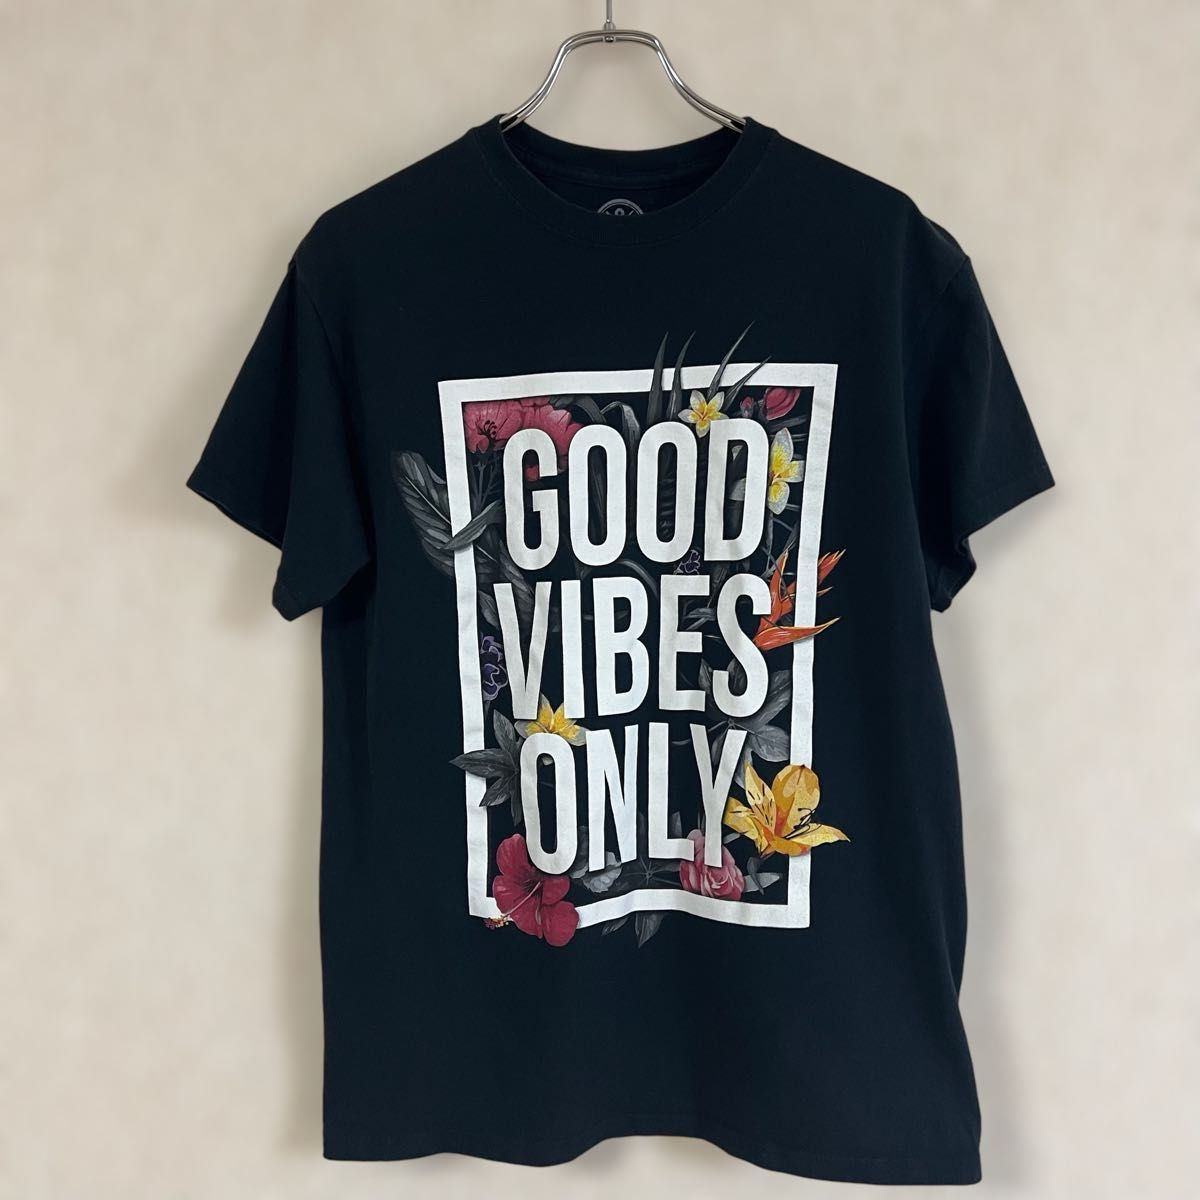 ODM / GOOD VIBES ONLY Tシャツ グッド バイブス オンリー